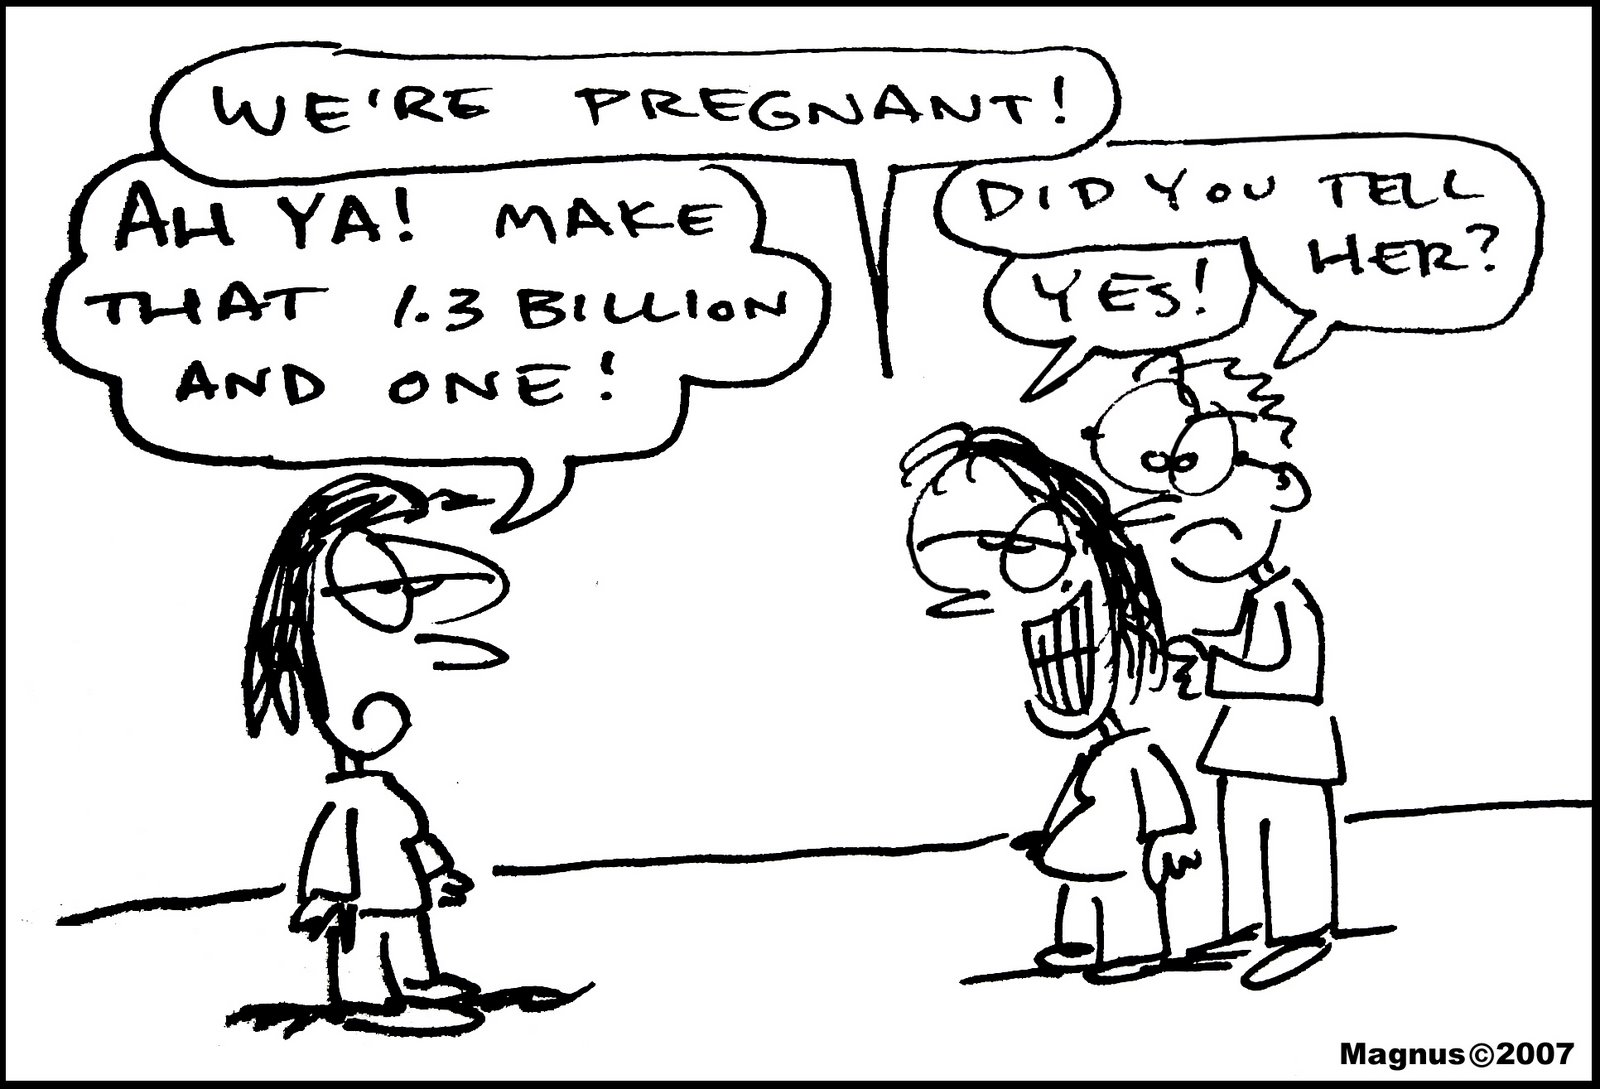 [pregnant+02+tell+chinese.jpg]